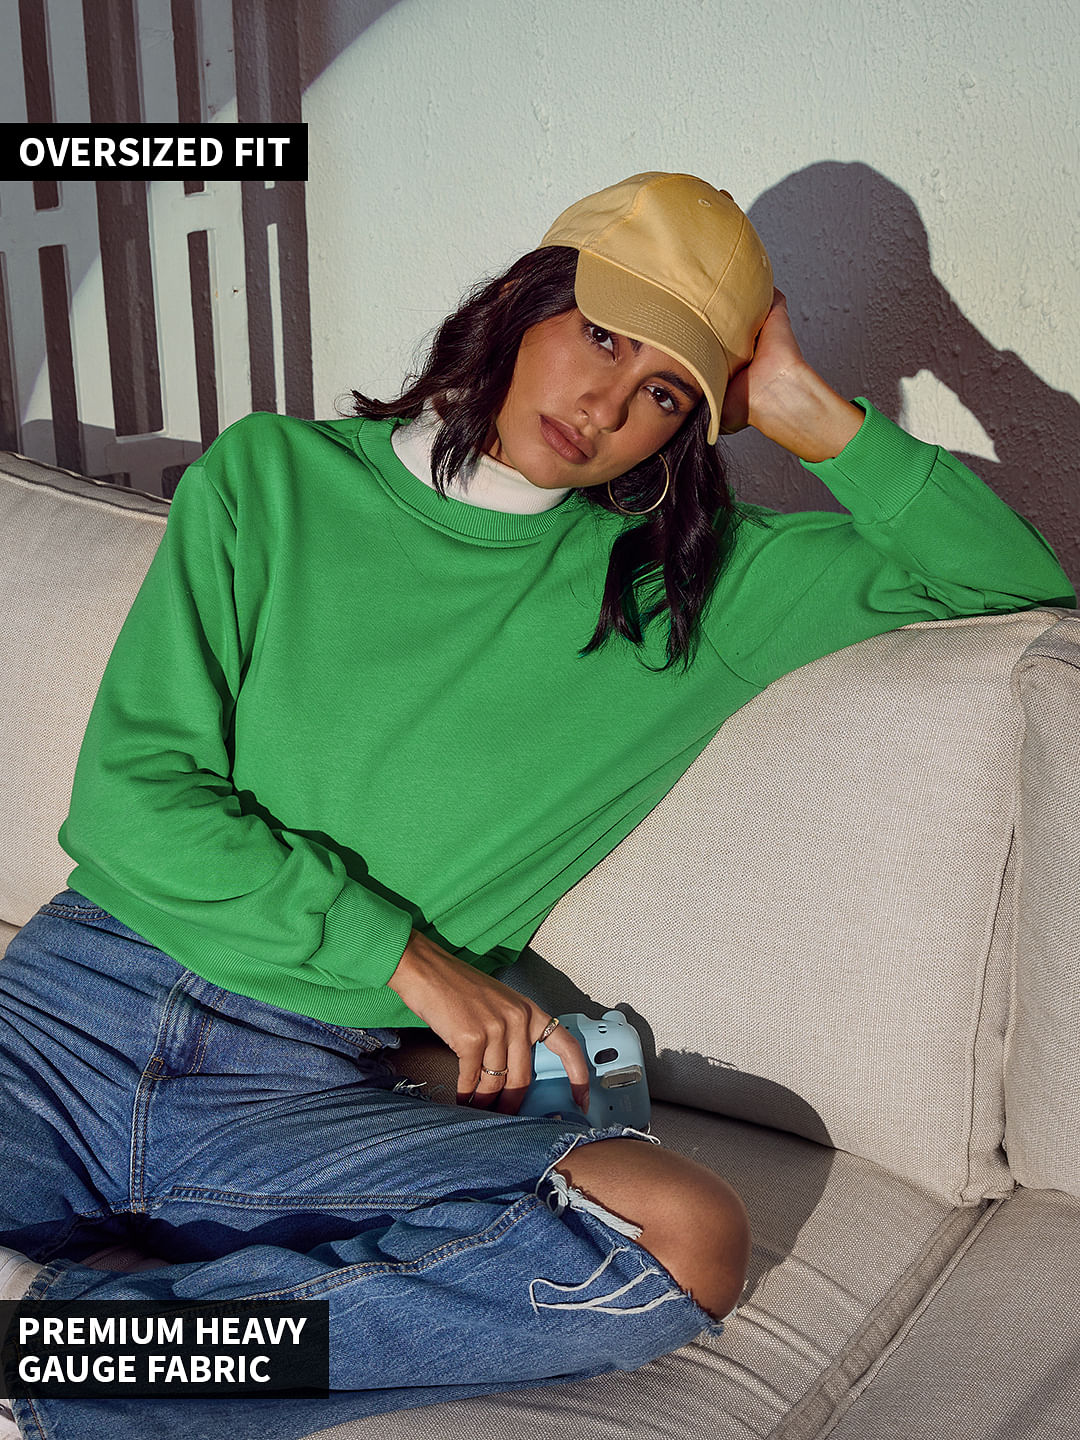 Buy Island Green Sweatshirt Women Sweatshirt Online